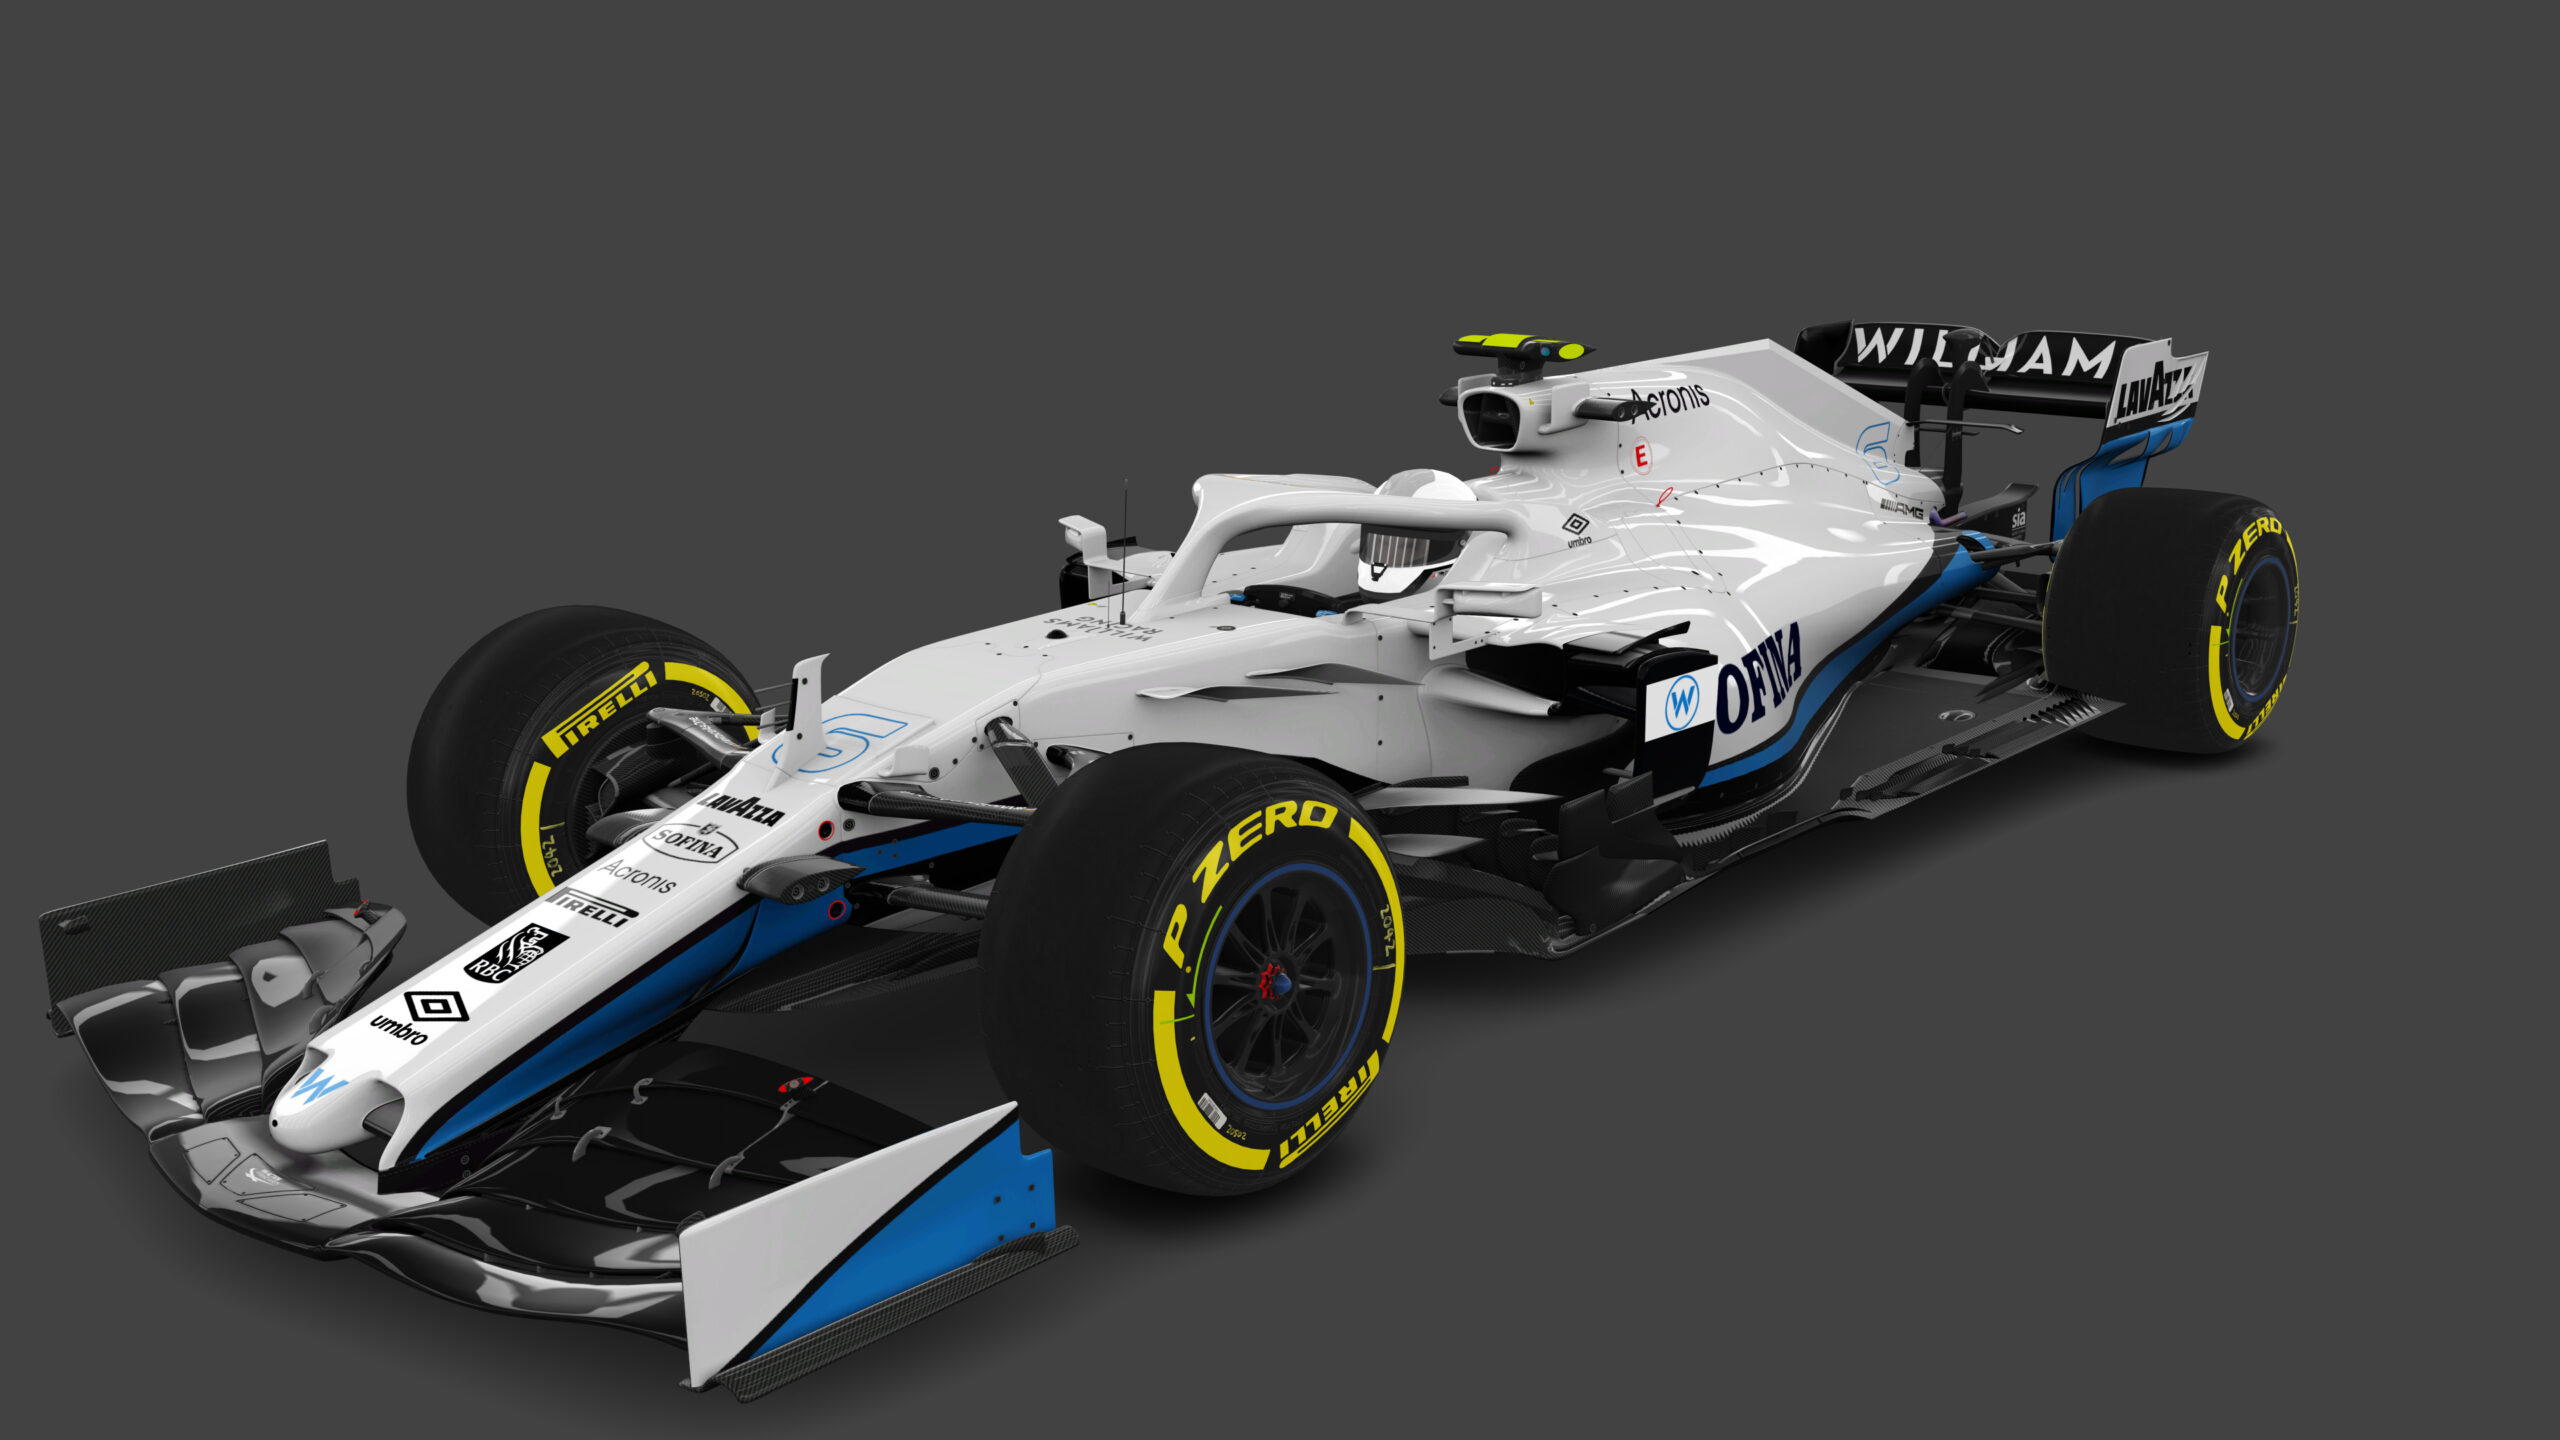 Williams Racing [6 Nicholas Latifi]